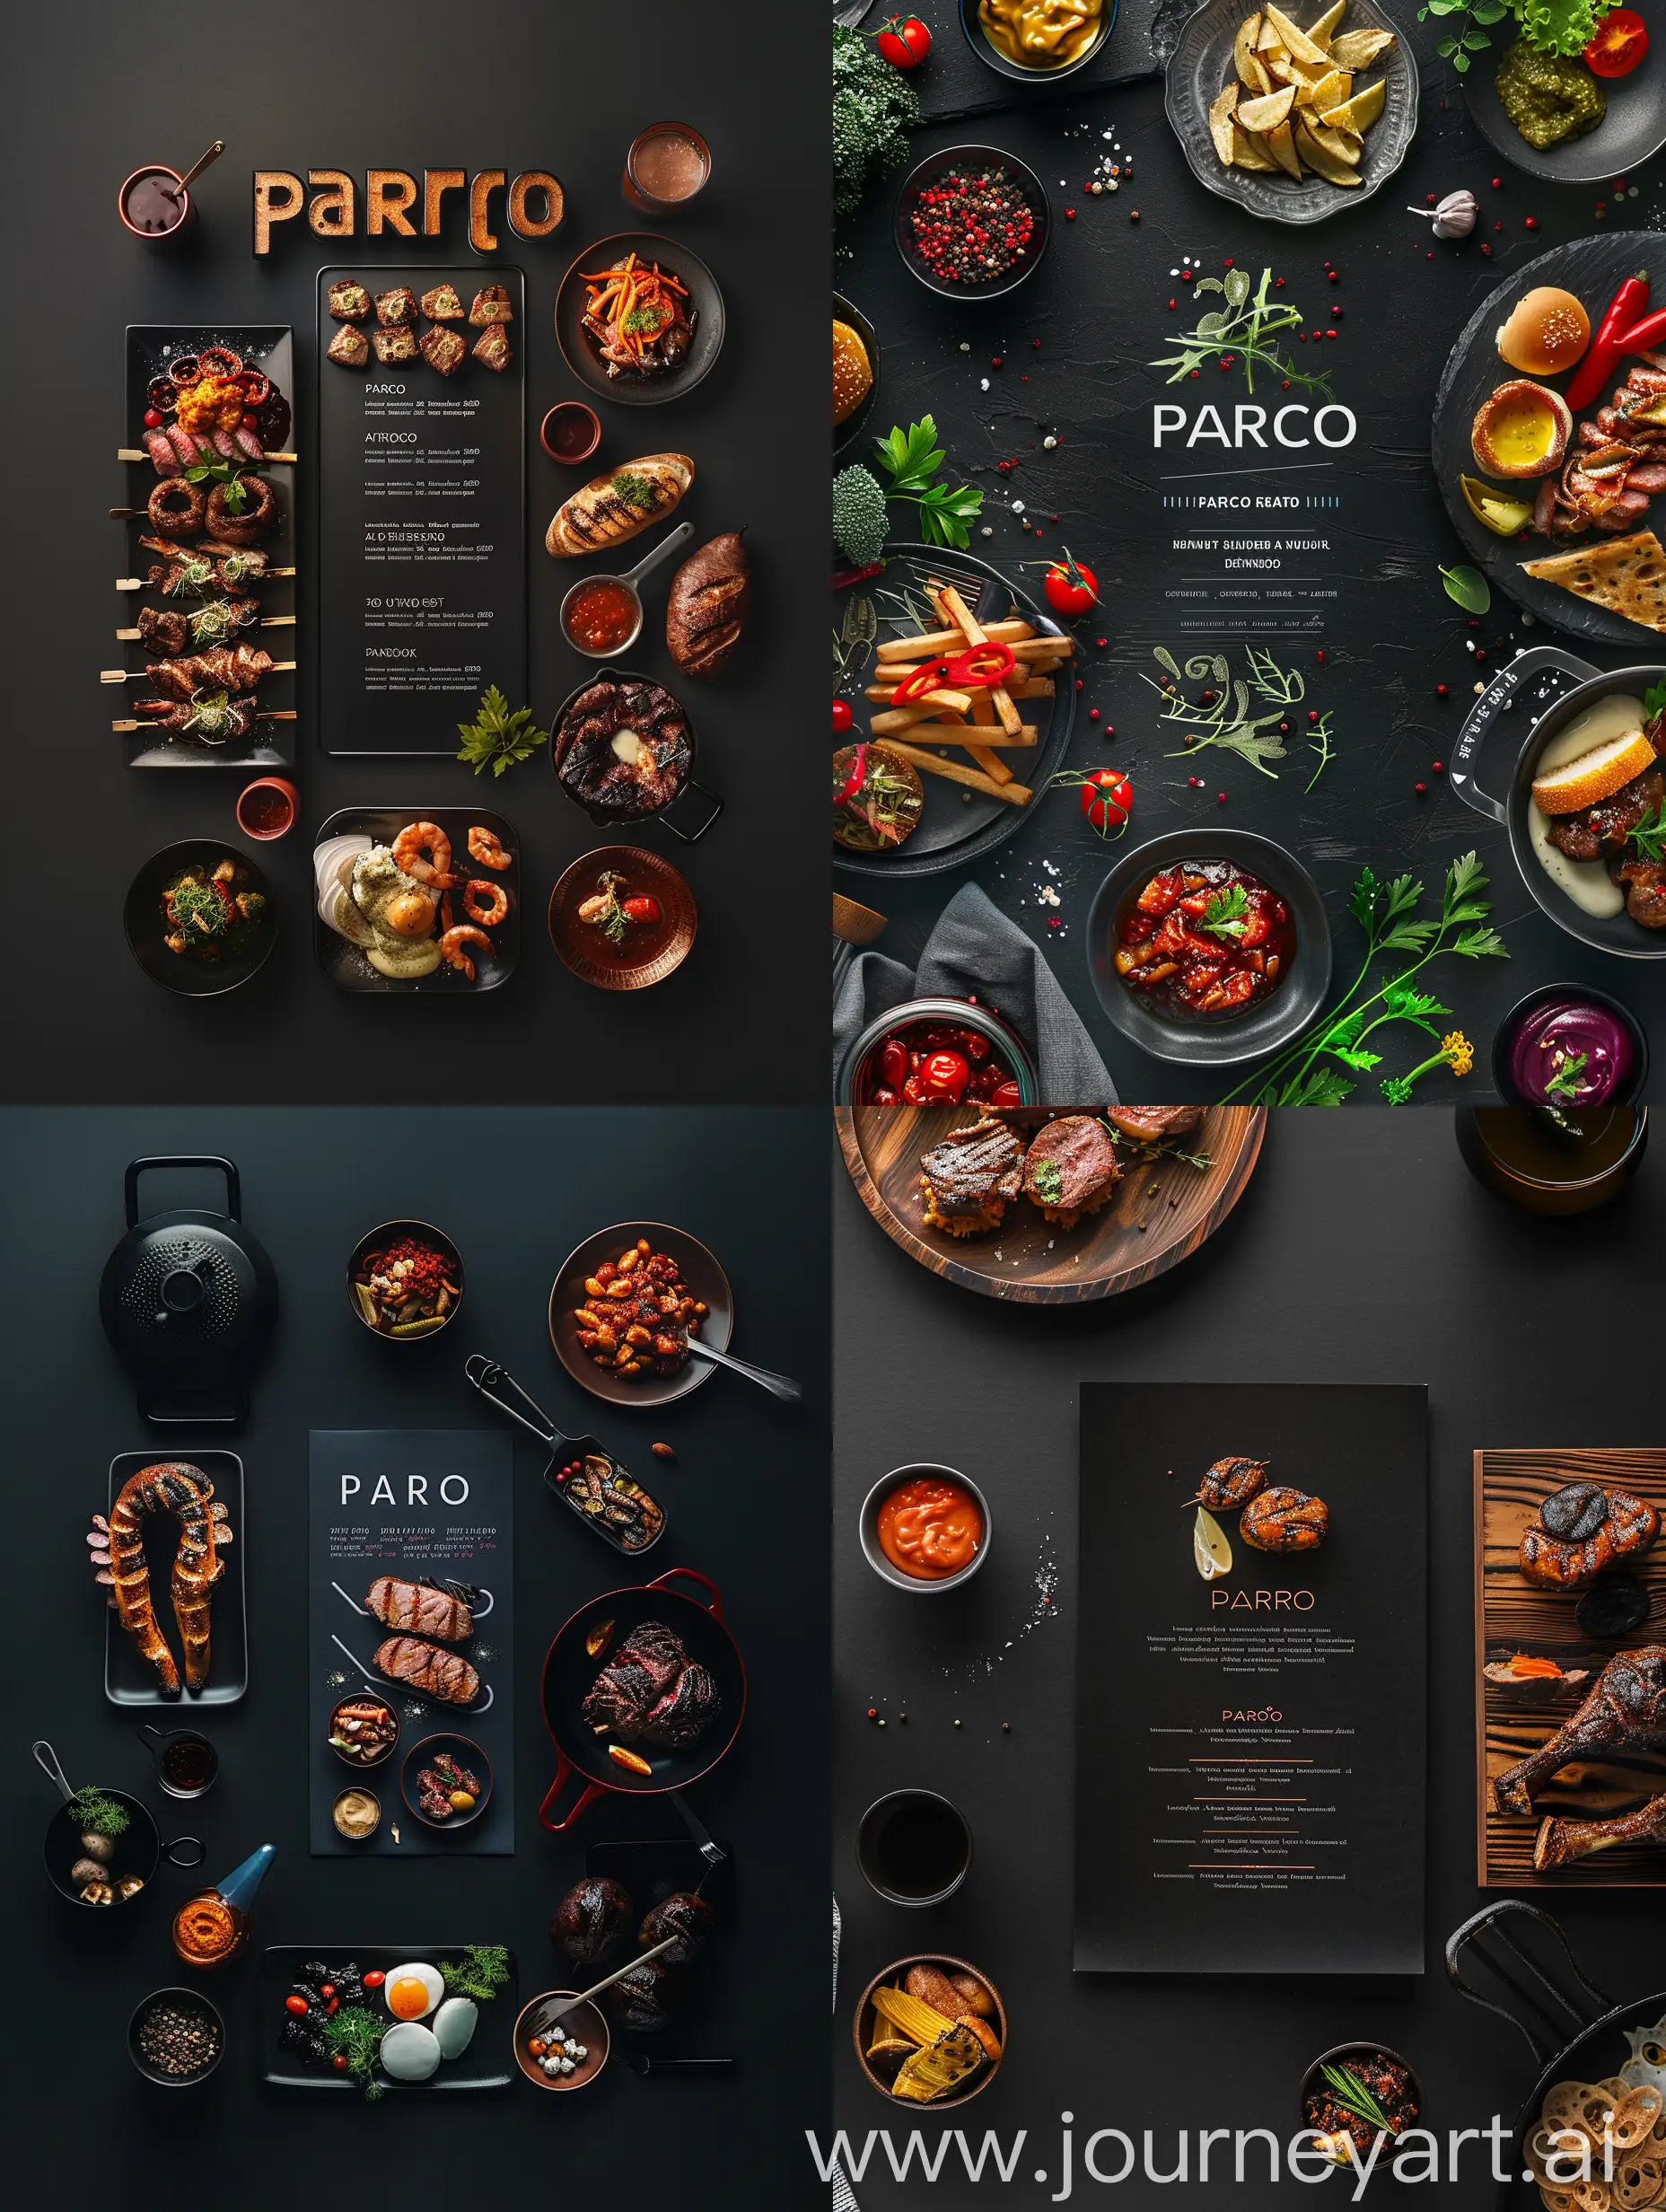 Elegant-Restaurant-Menu-Design-Featuring-Parco-Culinary-Delights-on-Dark-Background